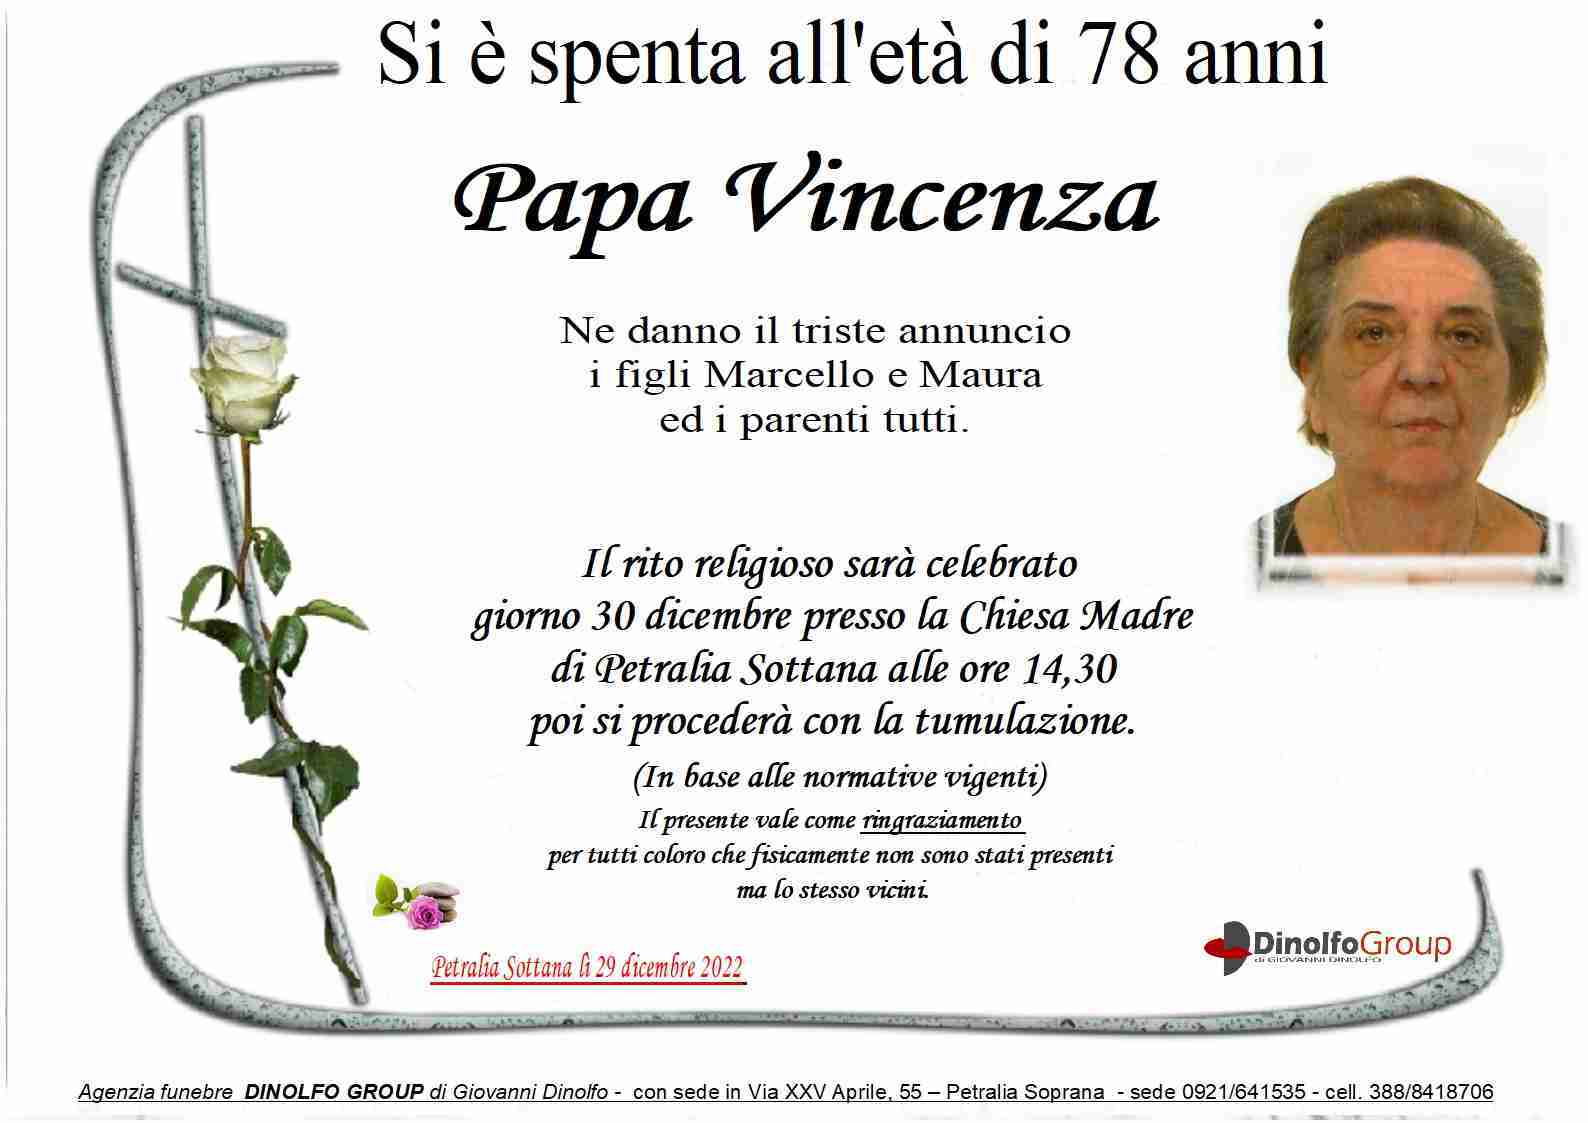 Vincenza Papa